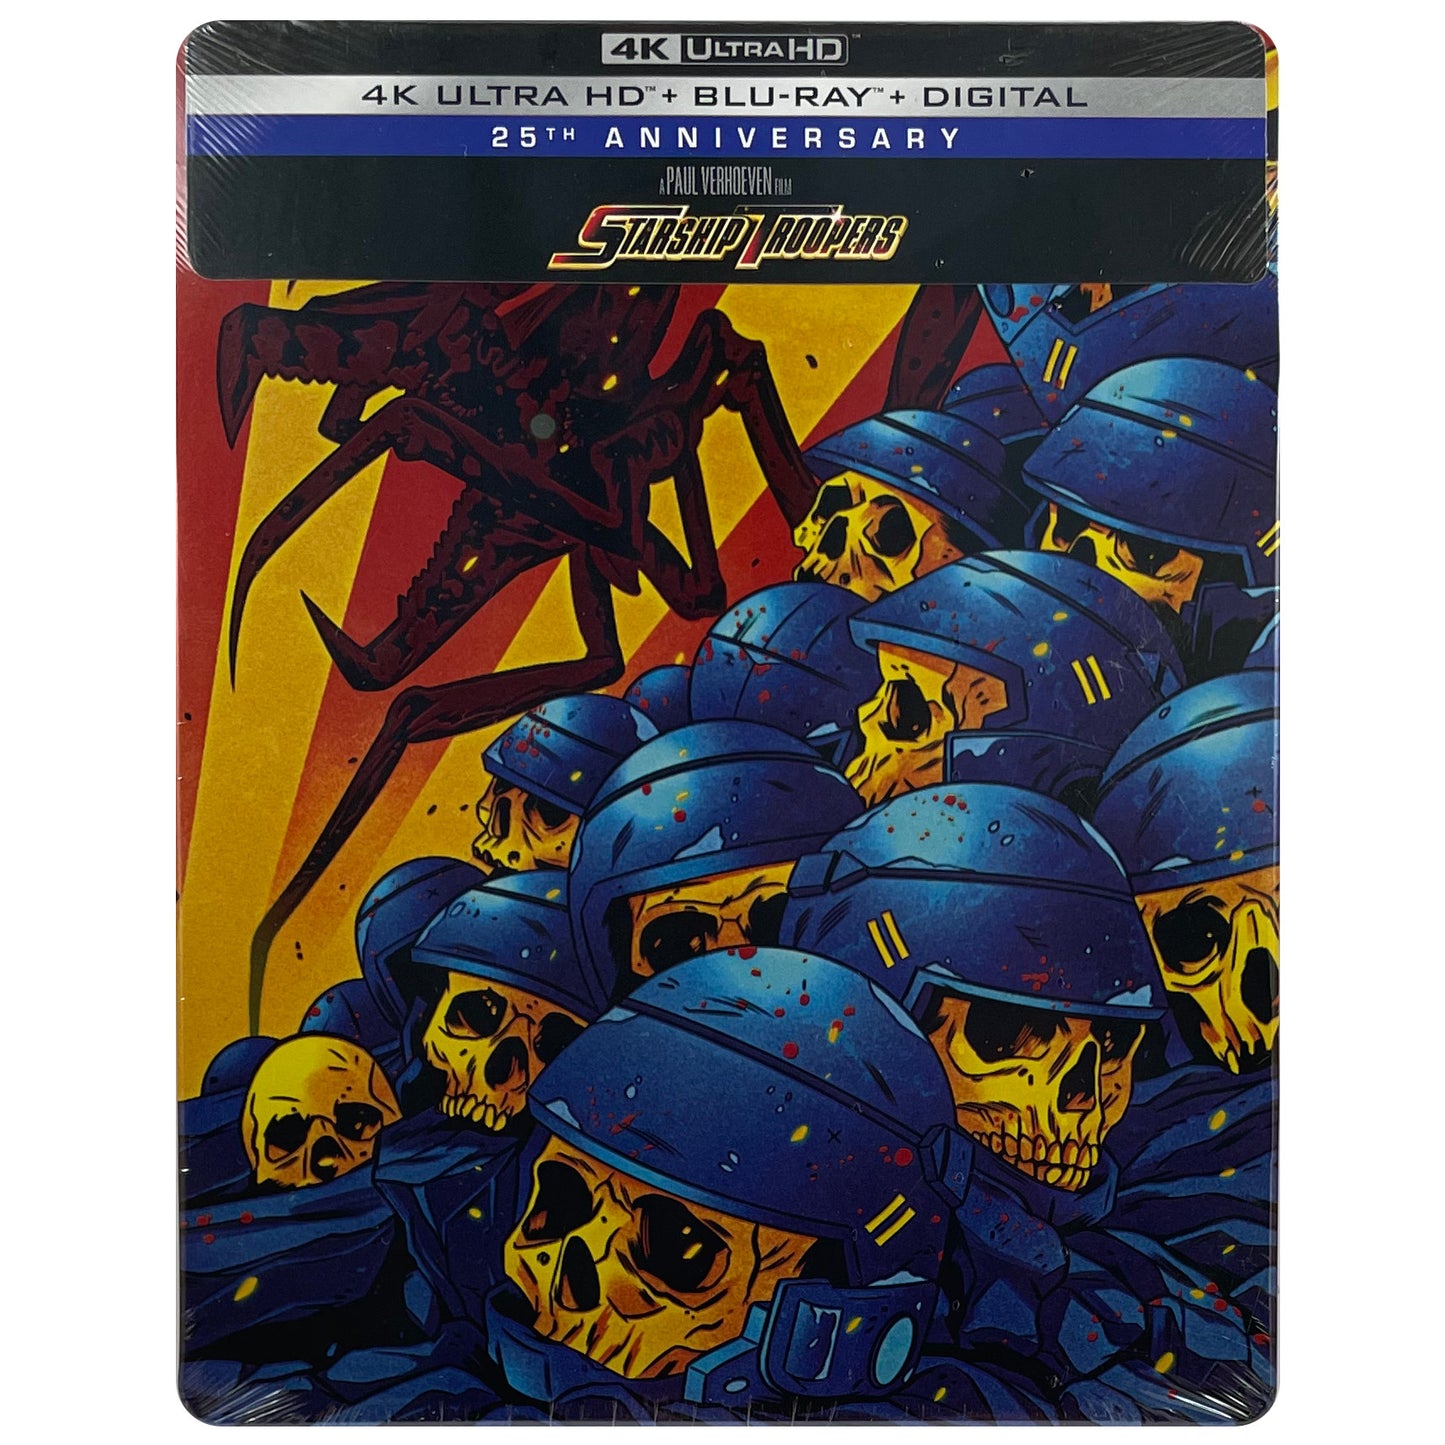 Starship Troopers 4K Steelbook - 25th Anniversary Edition